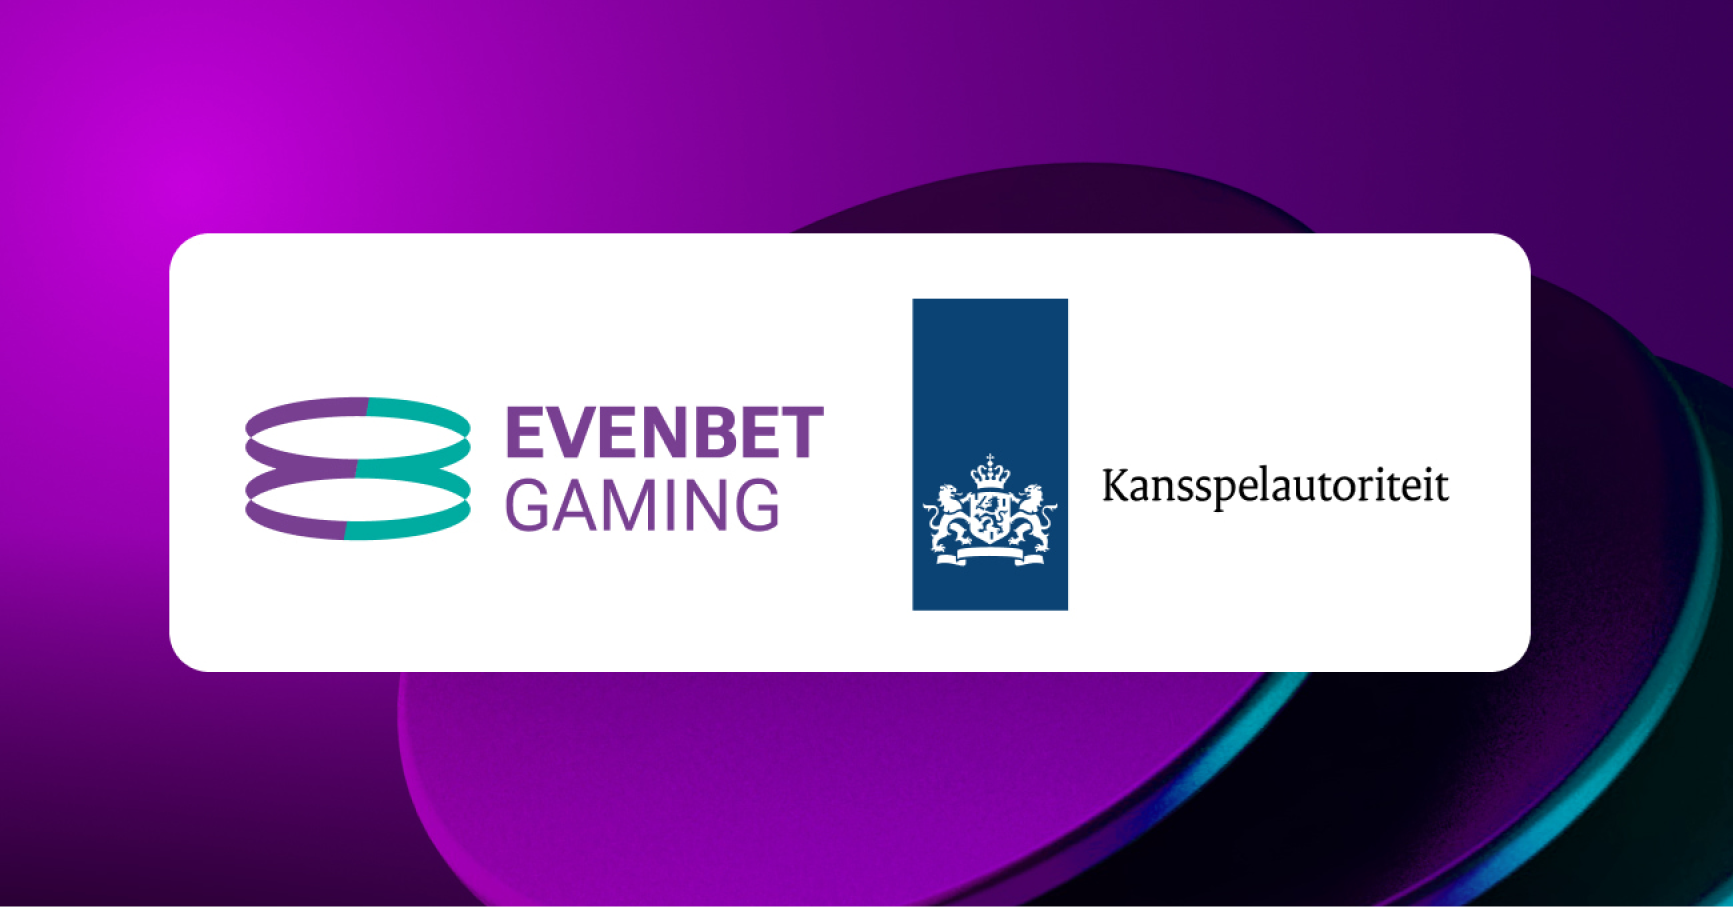 EvenBet Gaming obtains certification to enter the Netherlands